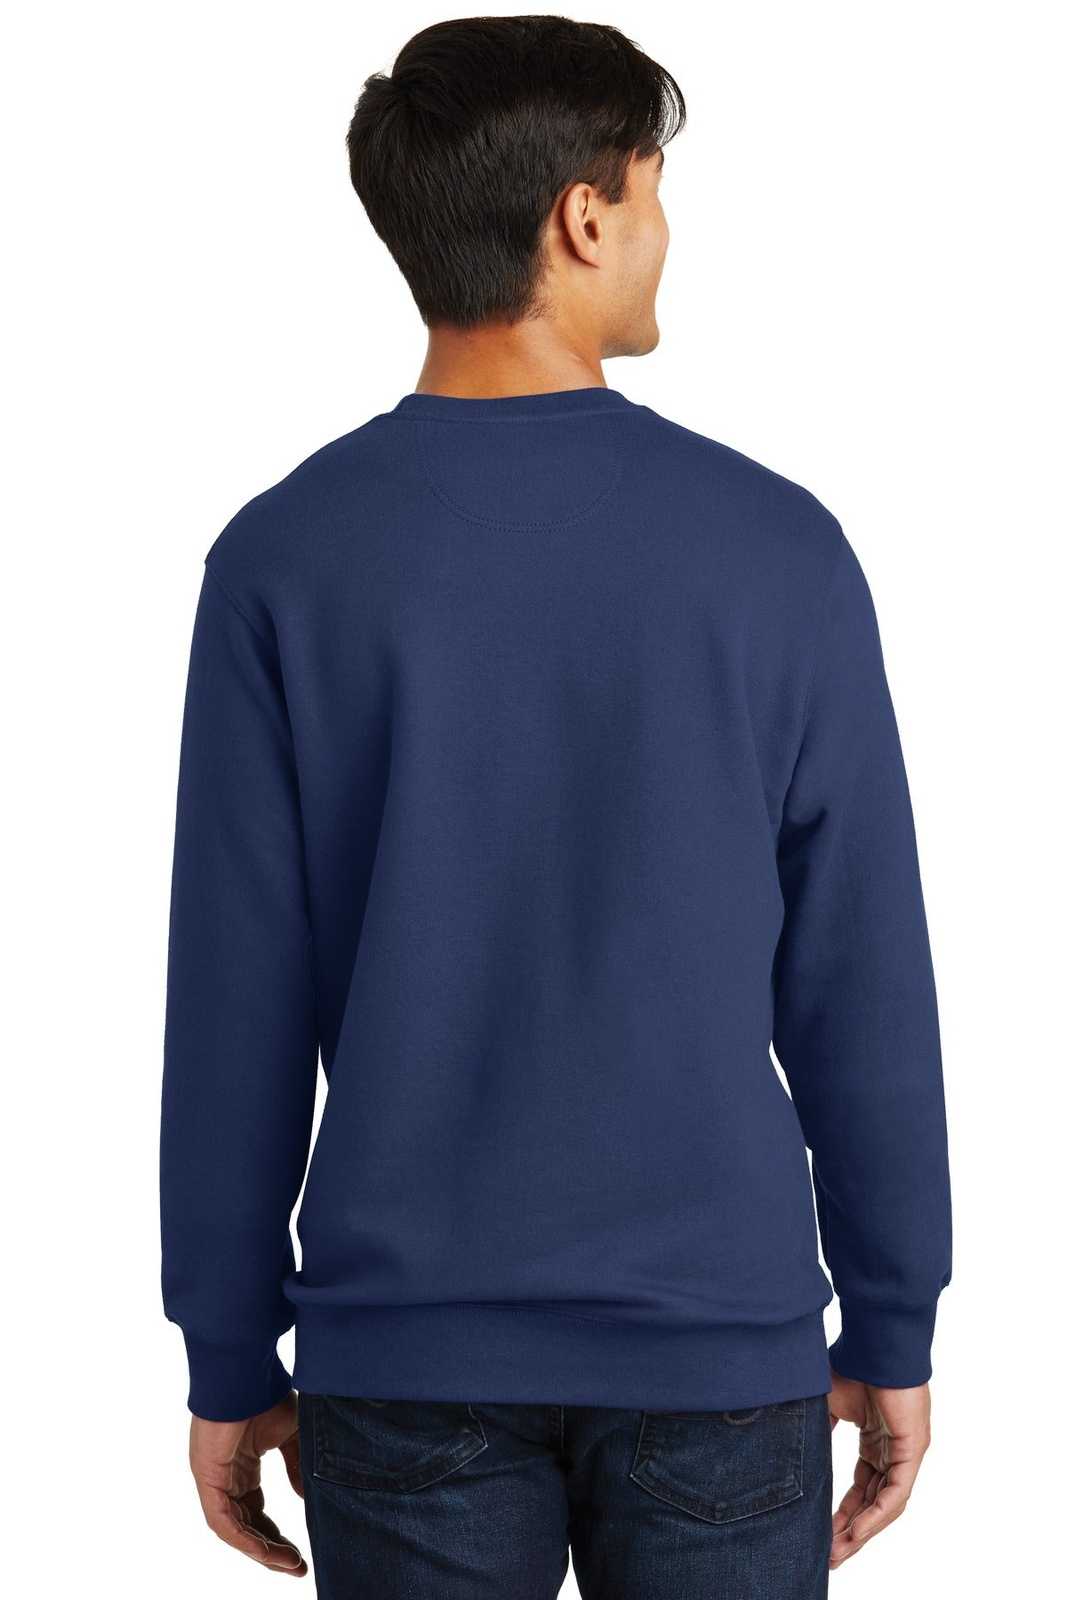 Port &amp; Company PC850 Fan Favorite Fleece Crewneck Sweatshirt - Team Navy - HIT a Double - 2